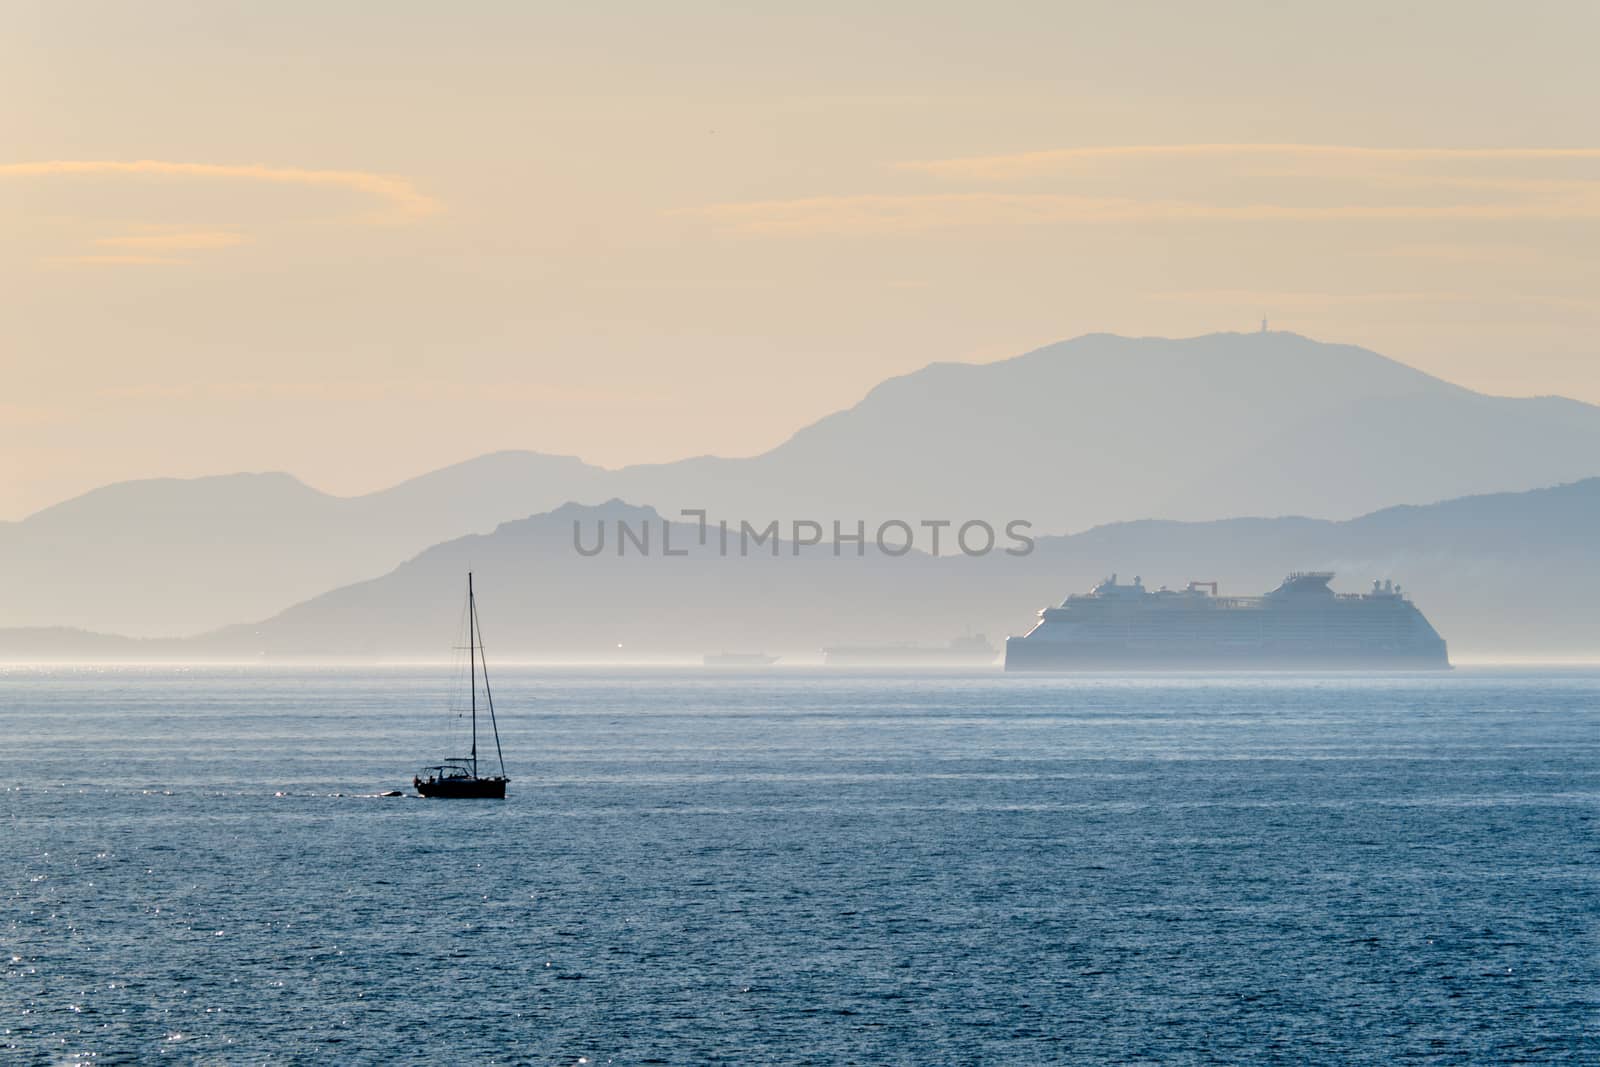 Cruise liner ship in Mediterranea sea by dimol